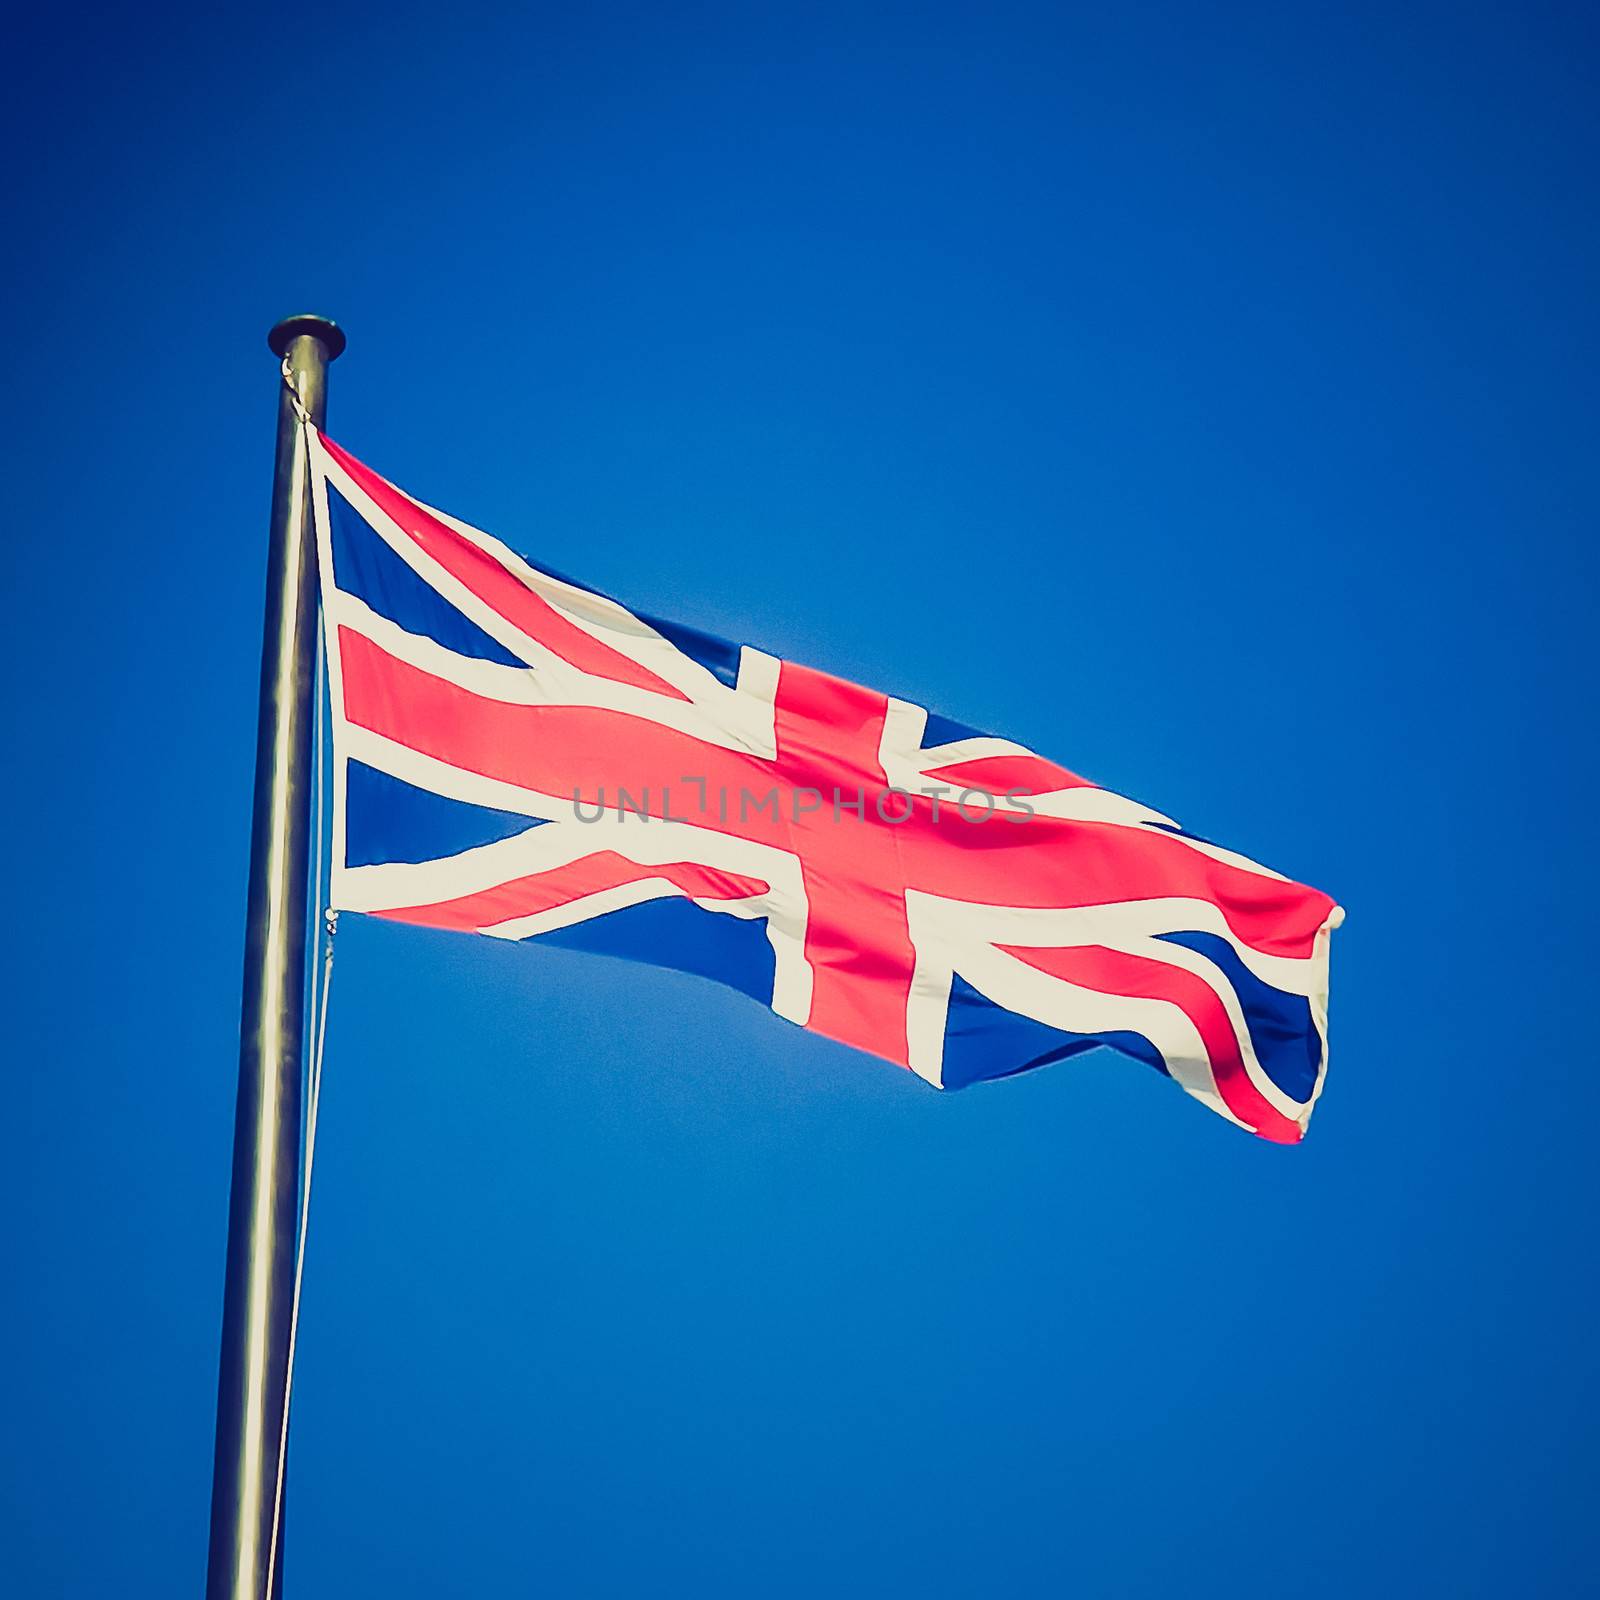 Vintage retro looking Union Jack national flag of the United Kingdom (UK)